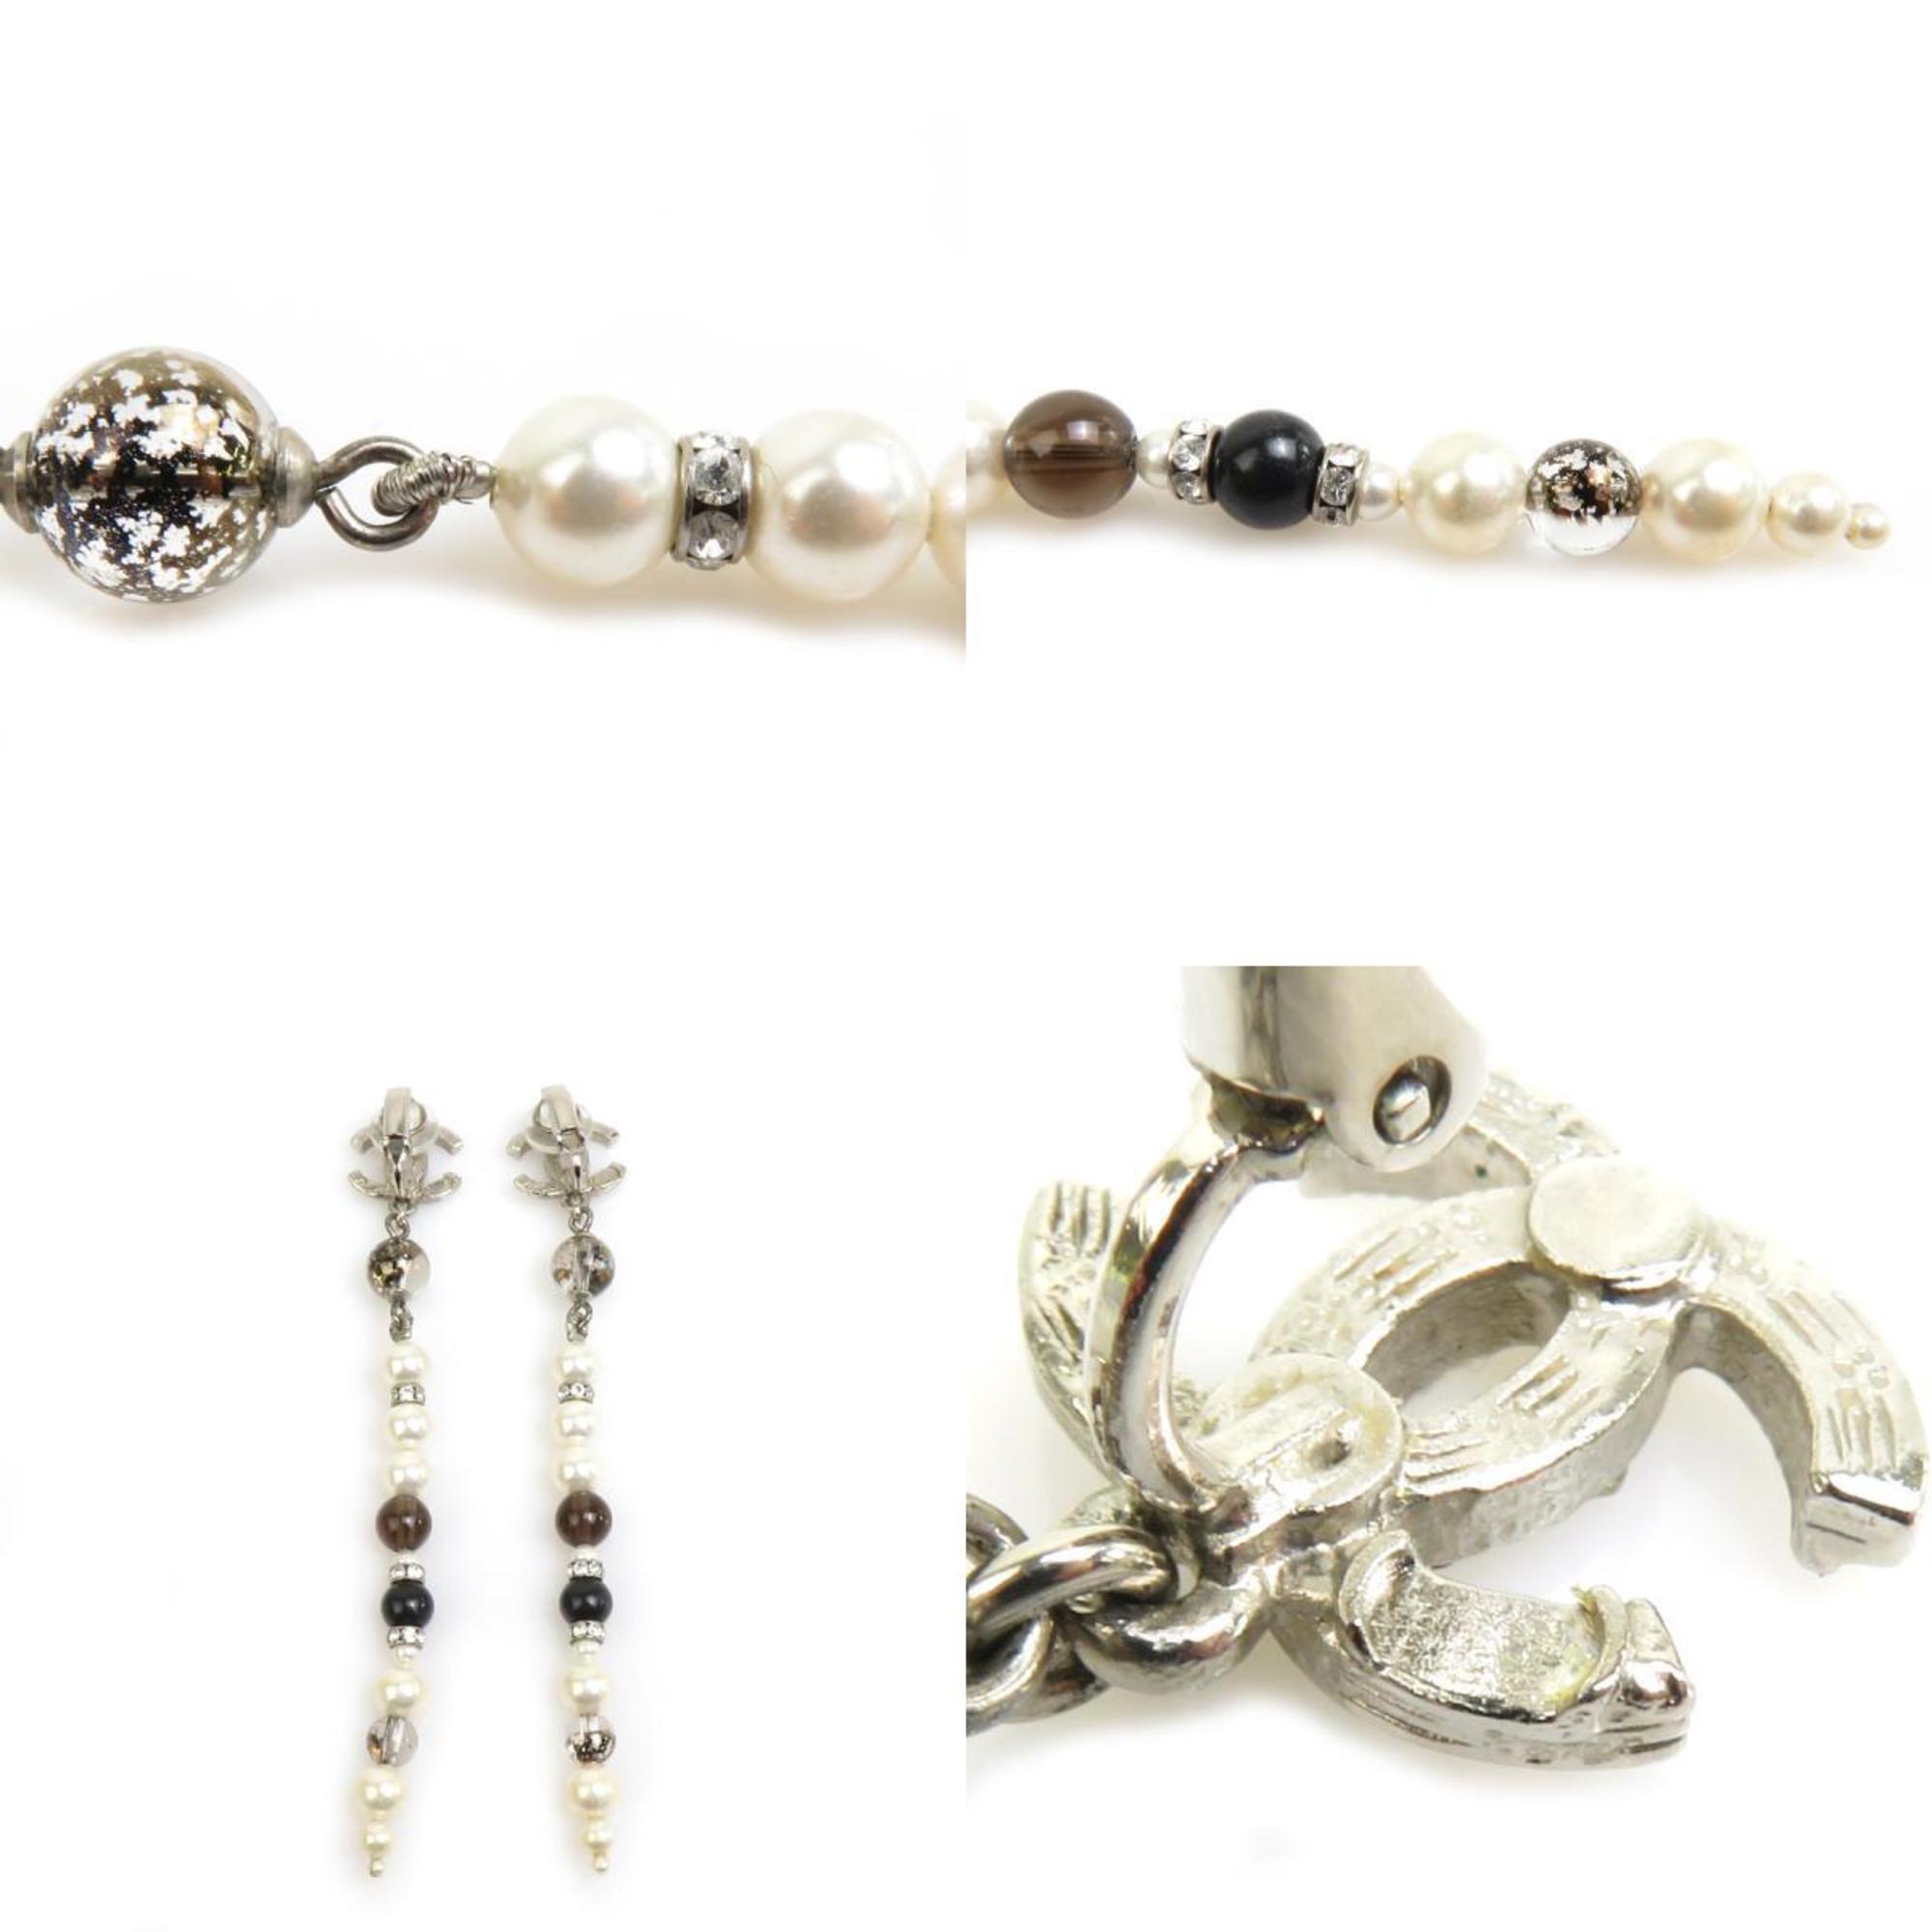 CHANEL Earrings Coco Mark Metal/Faux Pearl/Rhinestone Silver/White/Black Women's e58489a